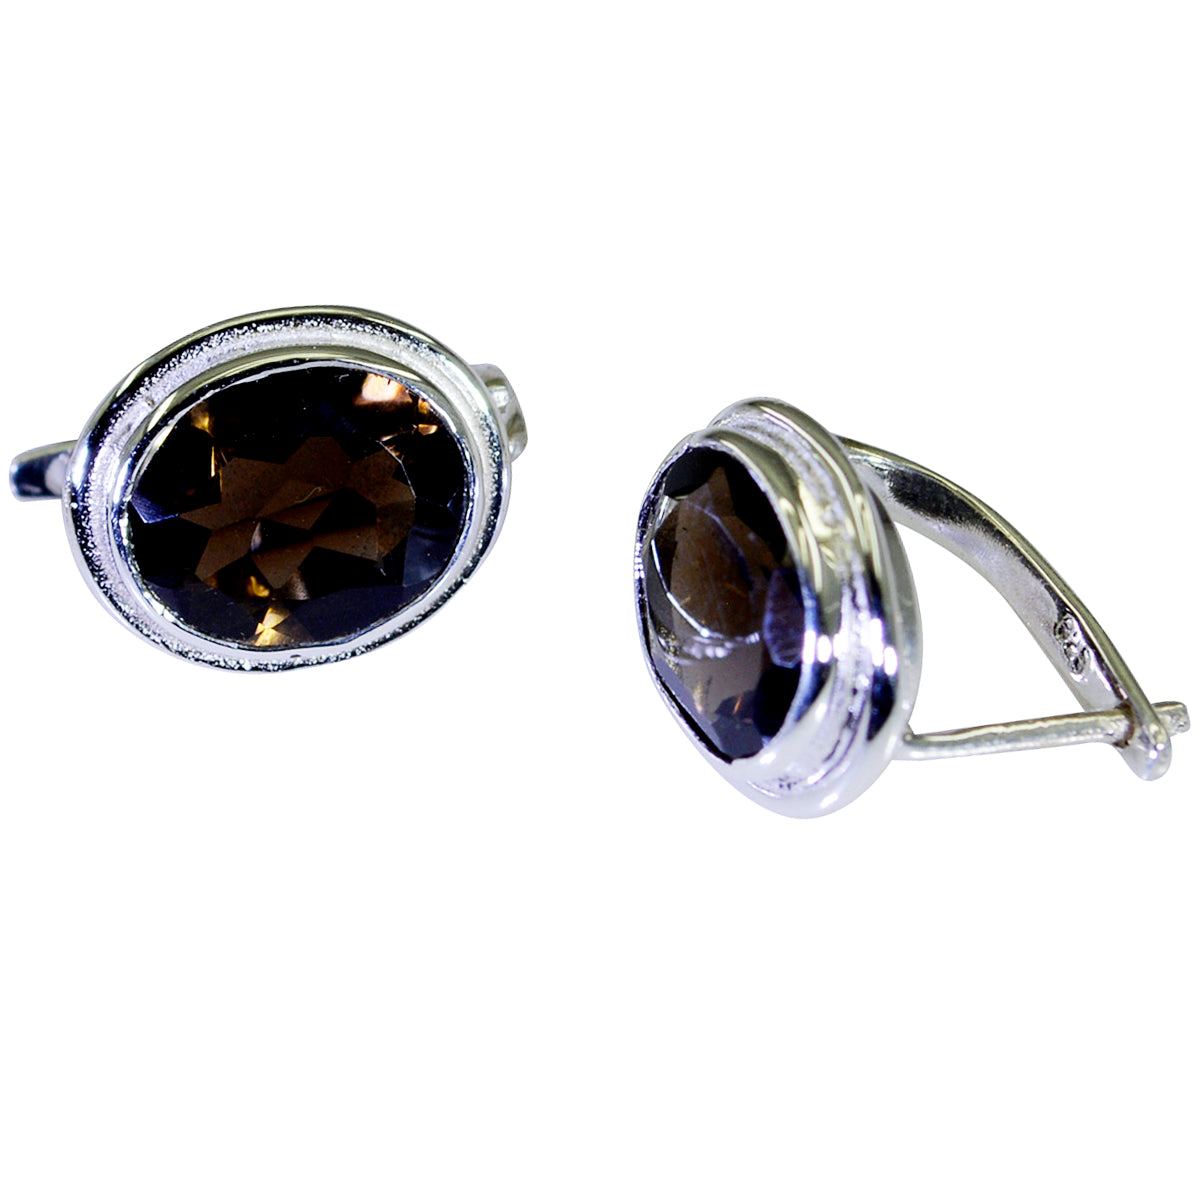 Riyo Natural Gemstone oval Faceted Brown Smokey Quartz Silver Earrings gift for girlfriend